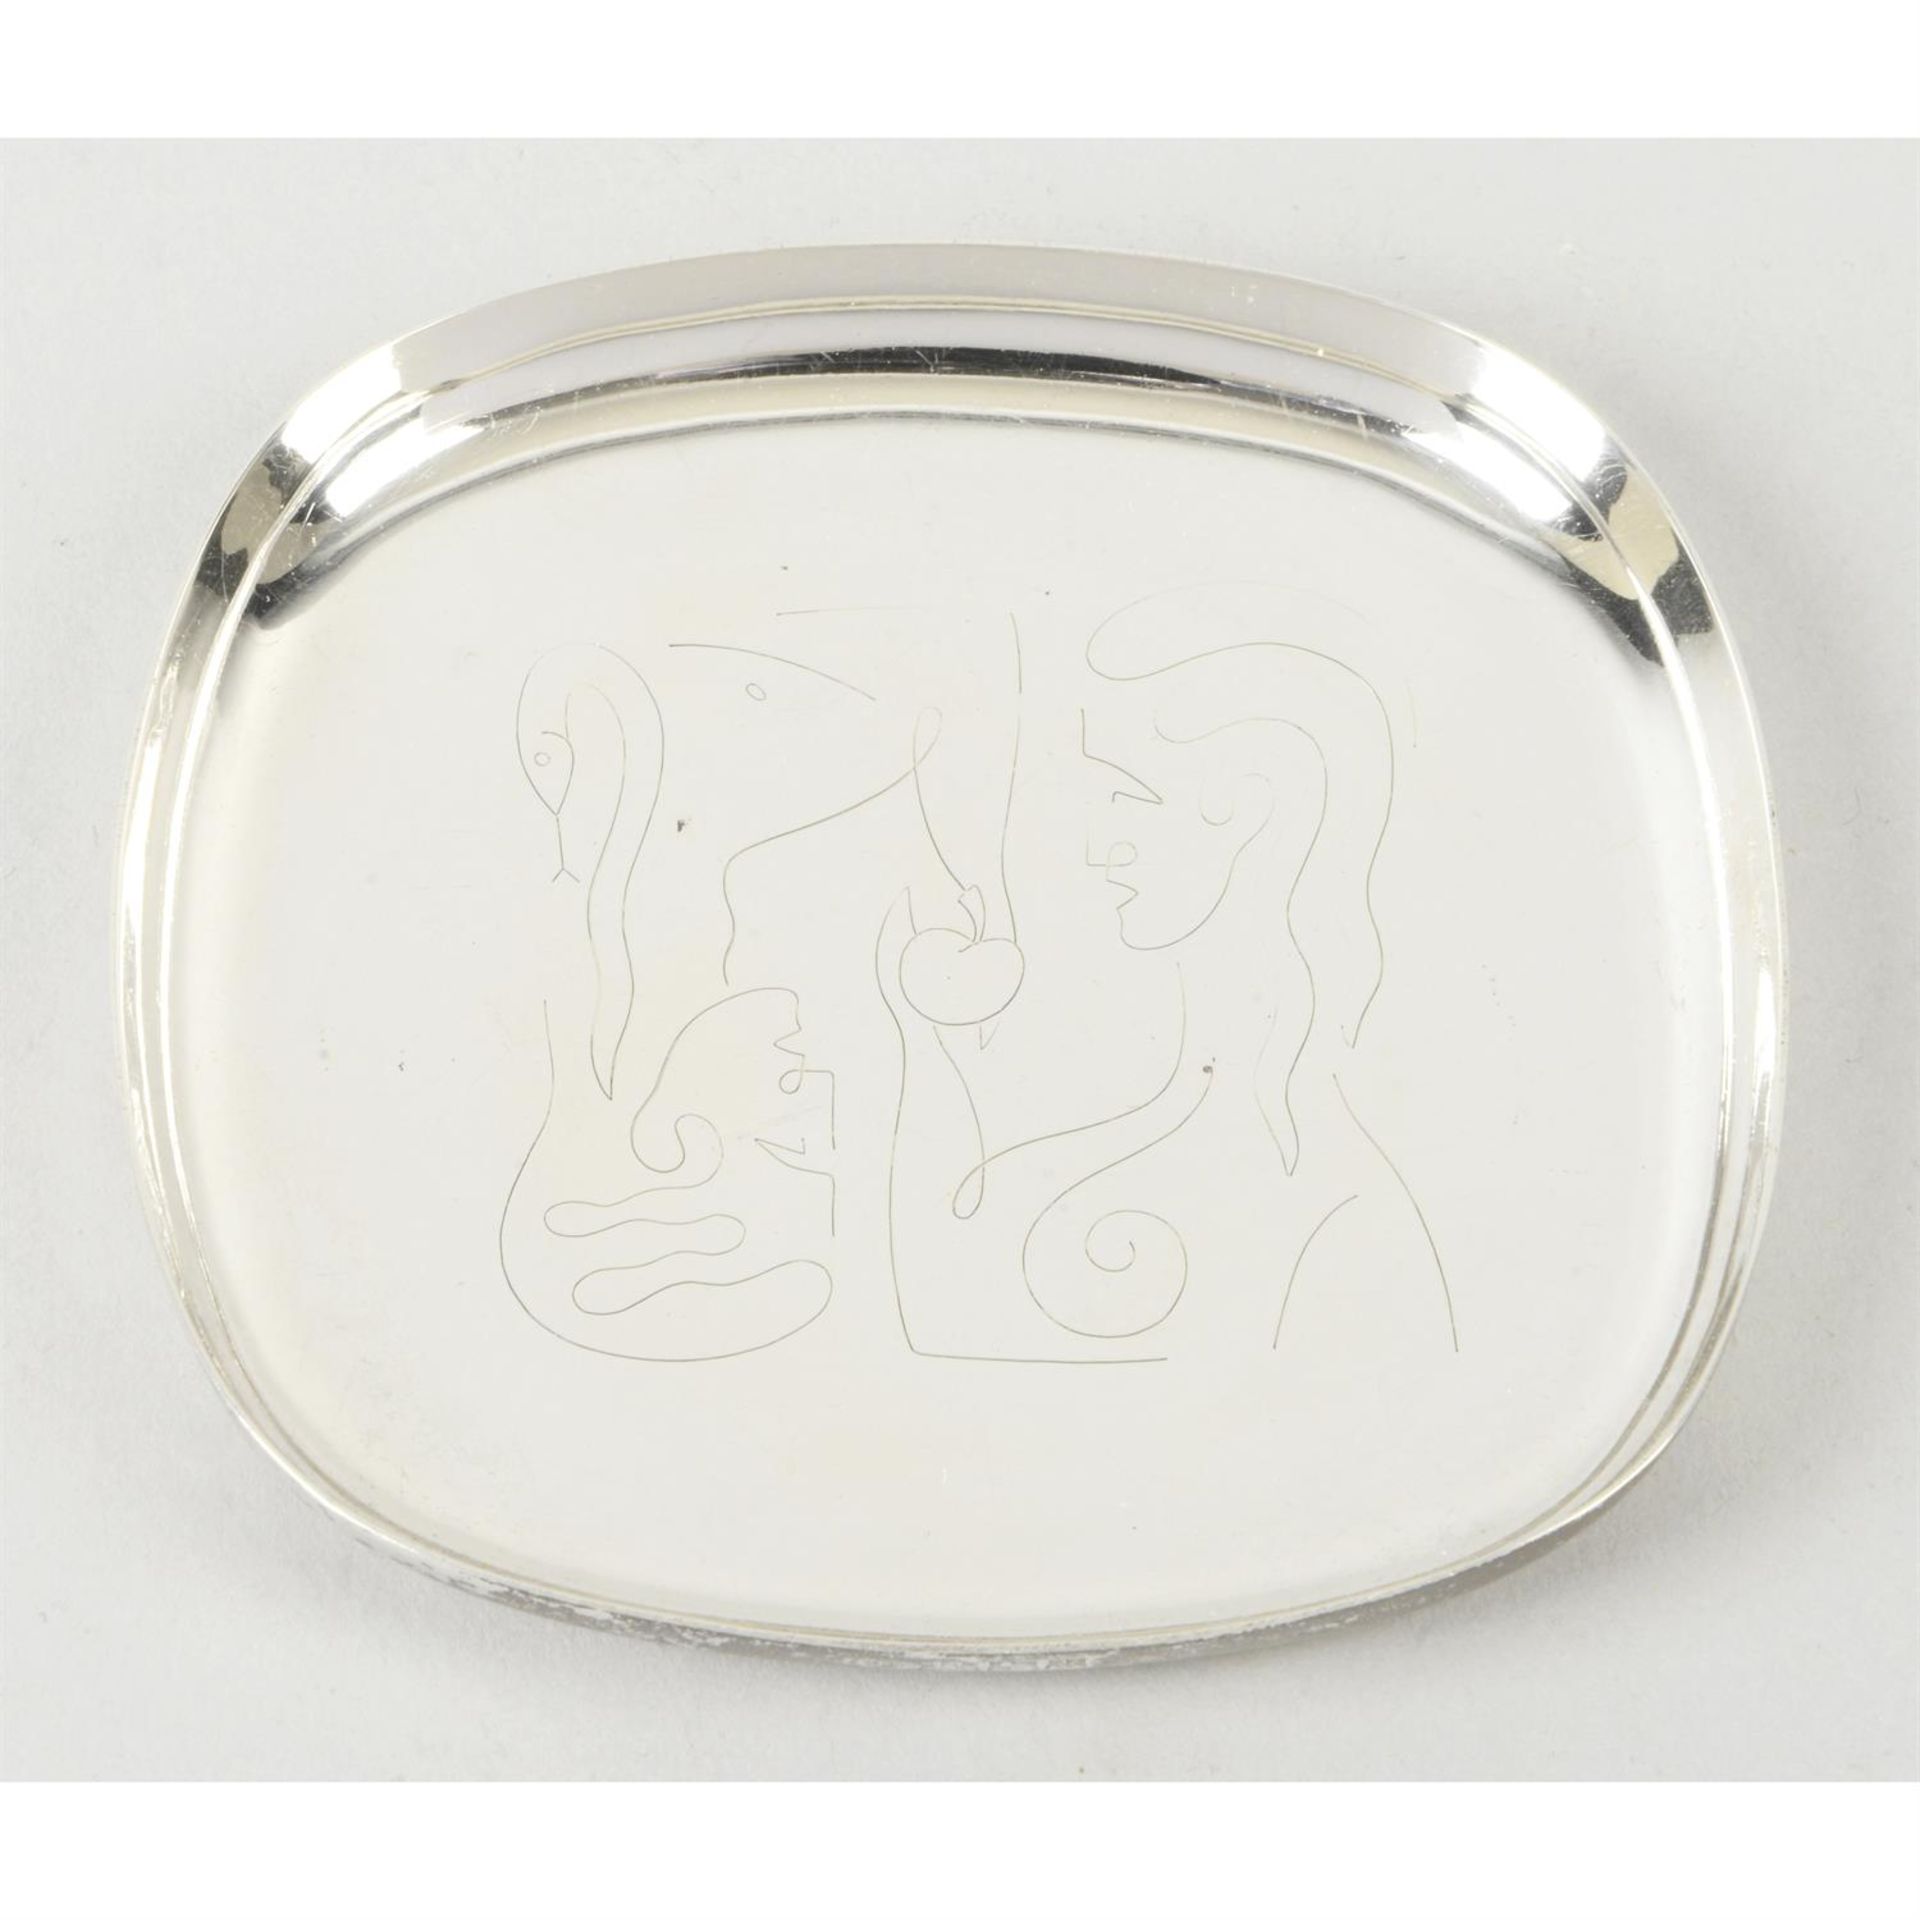 A mid-20th century silver Adam and Eve dish, designed by Geoffrey Bellamy.